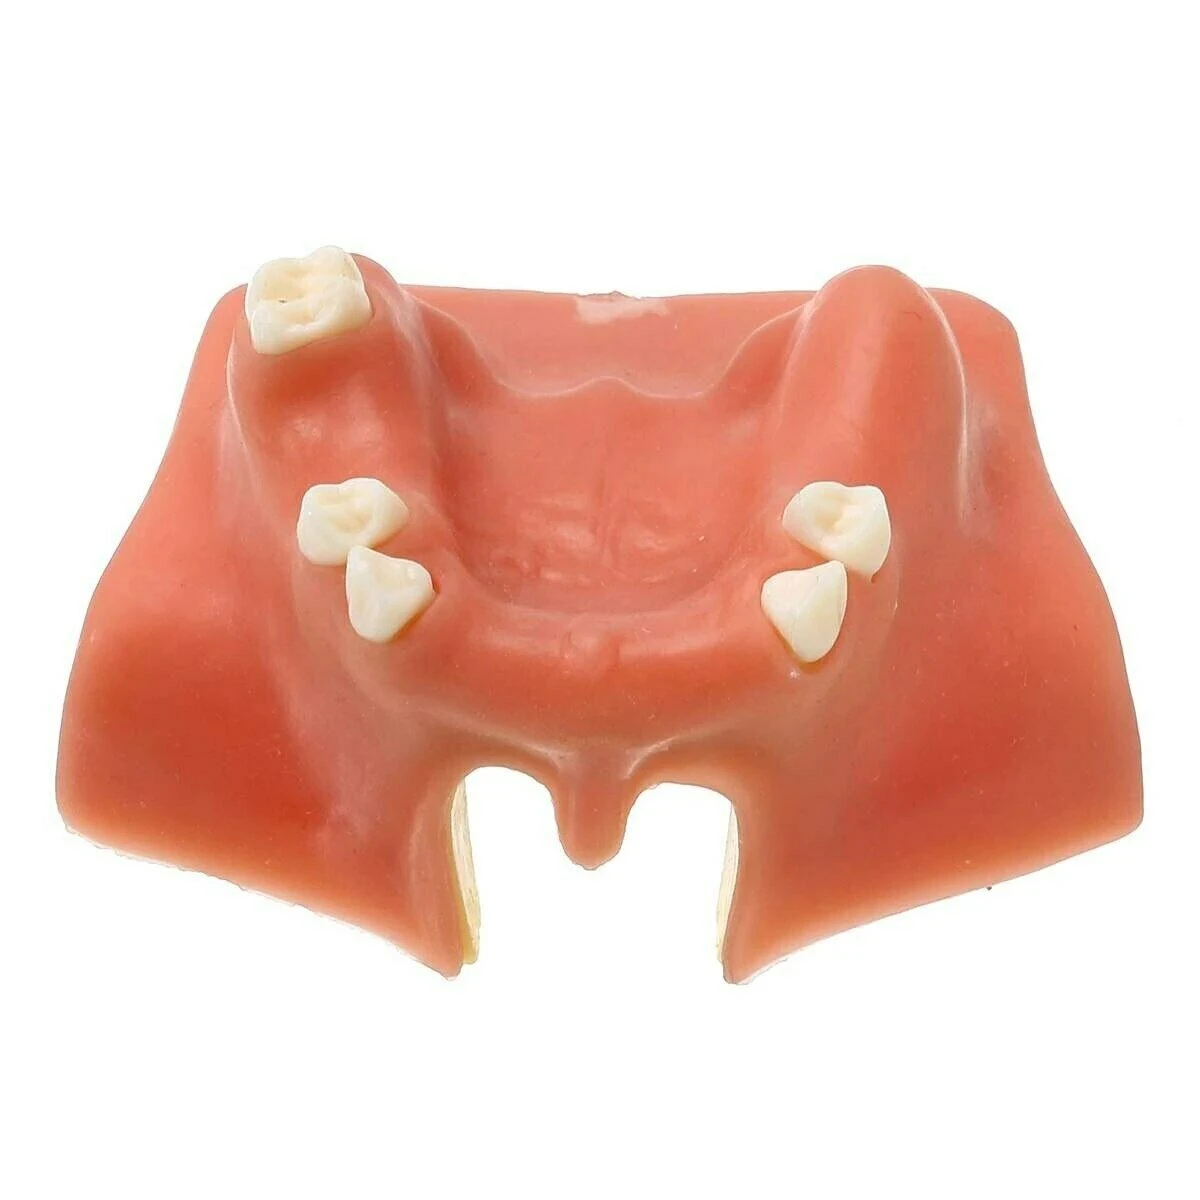 

2pcs Dental Model Sinus Lift Practice Teaching Teeth Upper Jaw Study Demonstration Tooth Implant Simulator Typodont Dentistry